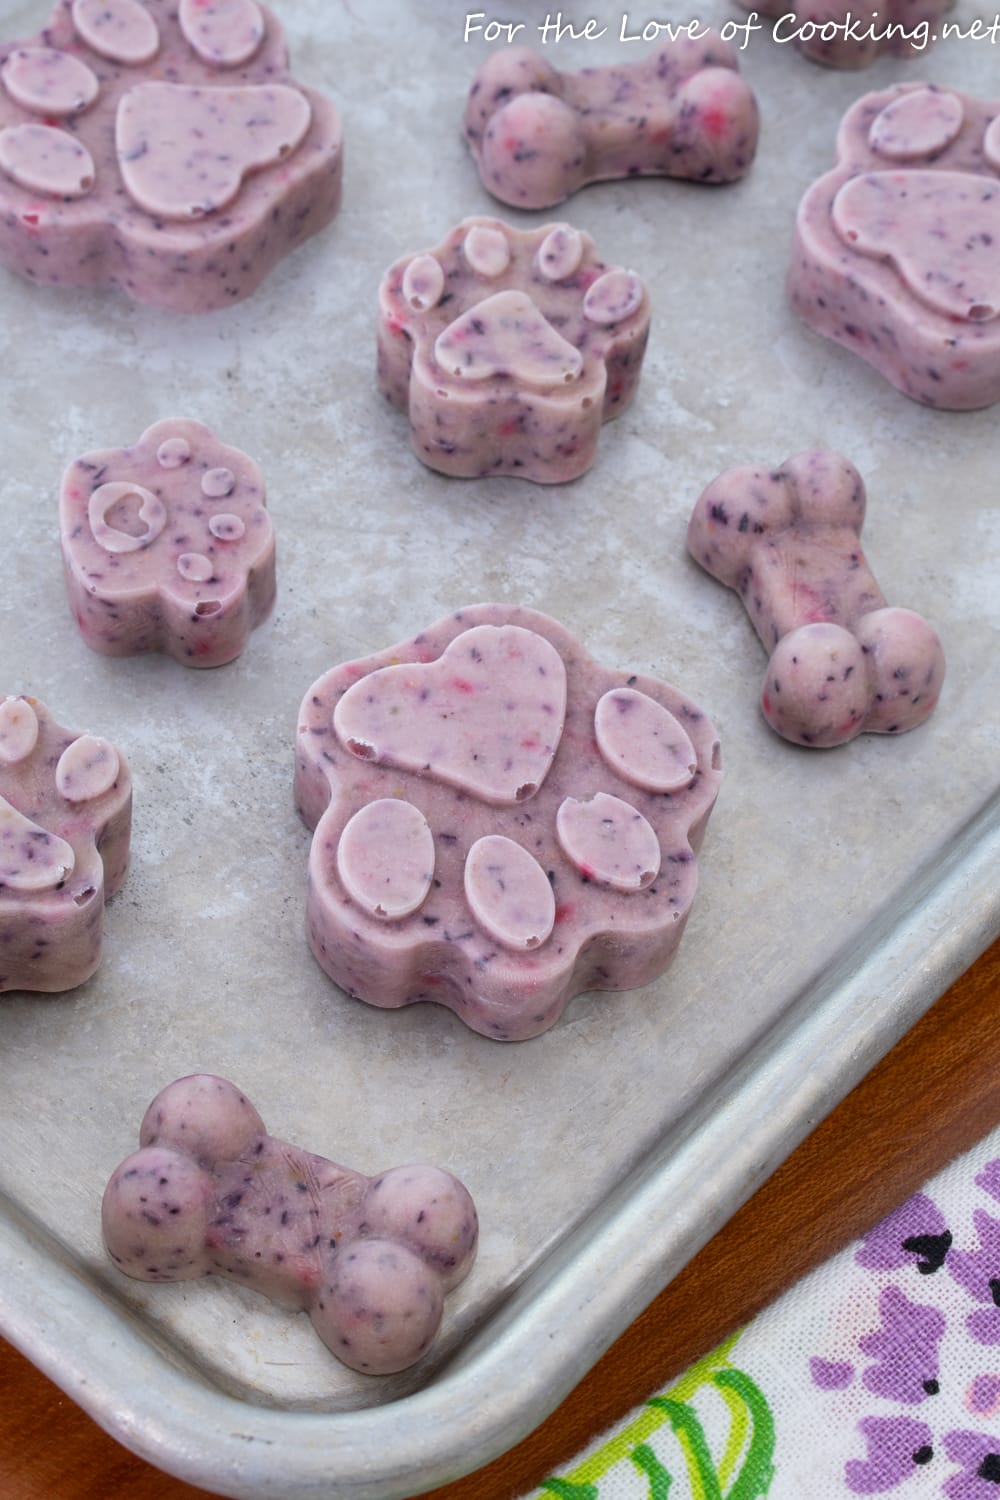 Use a Silicone Baking Mold to Make Frozen Dog Treats - Animal